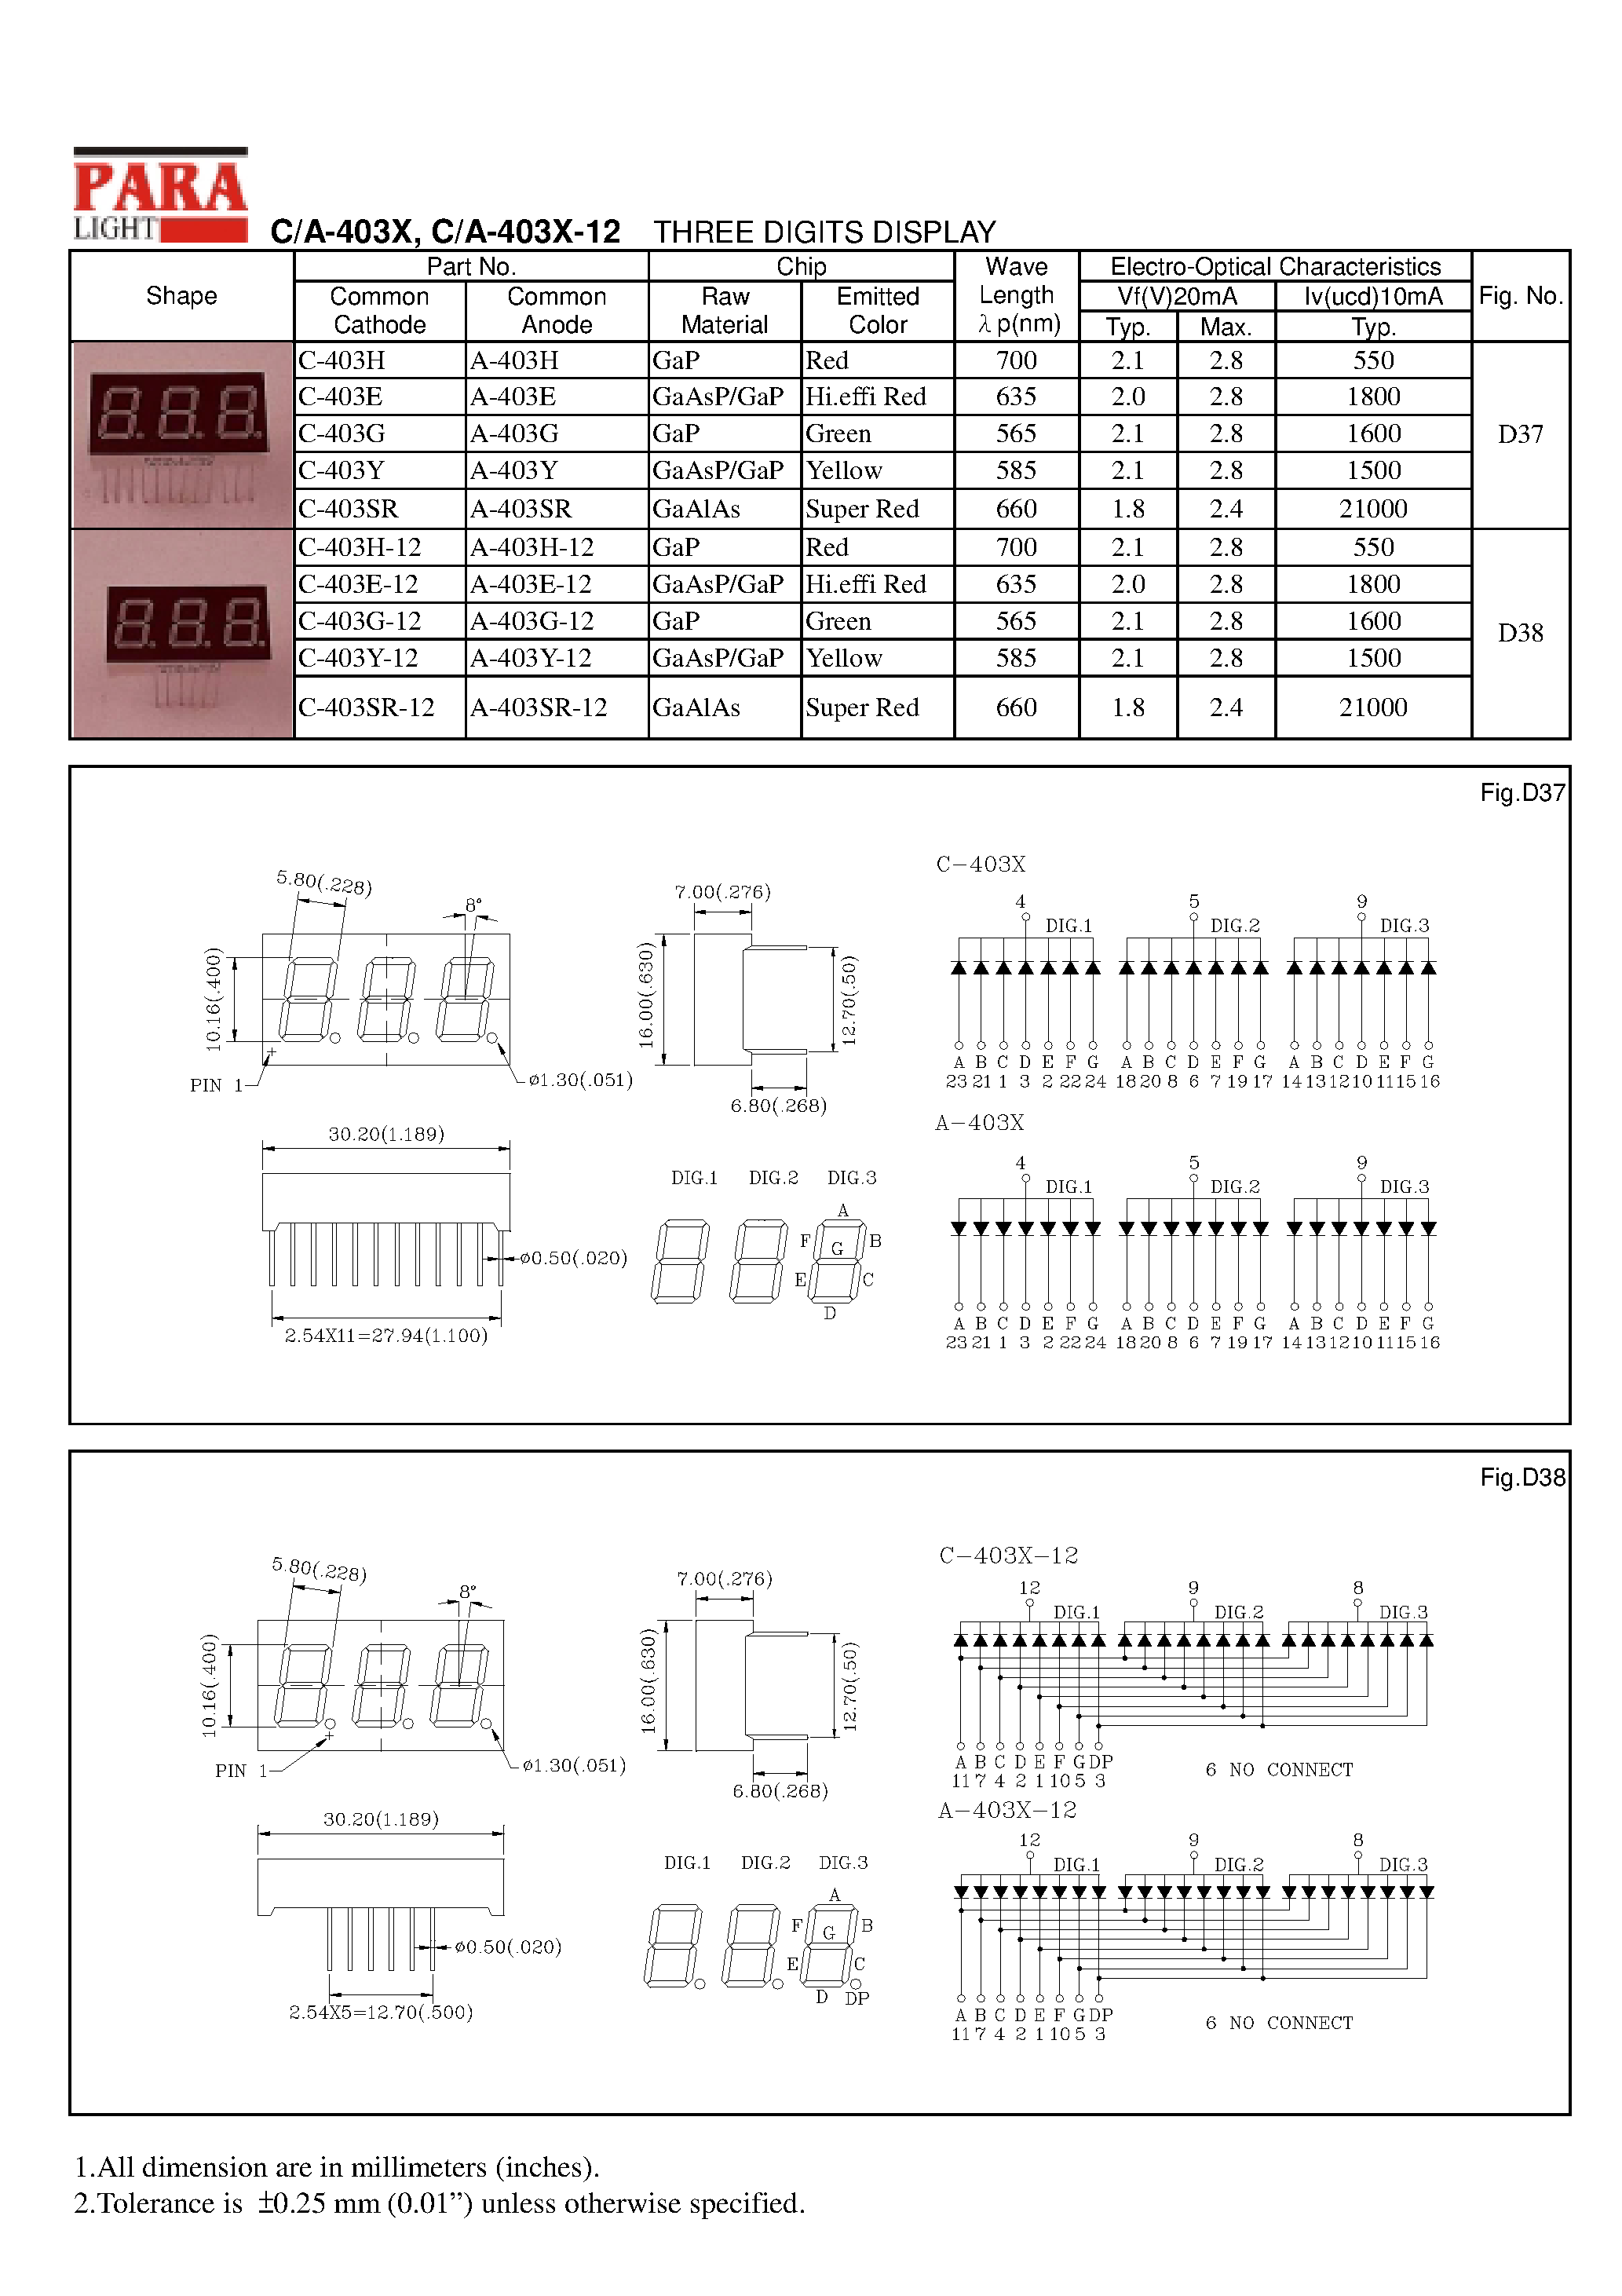 Datasheet A-403SR-12 - THREE DIGITS DISPLAY page 1